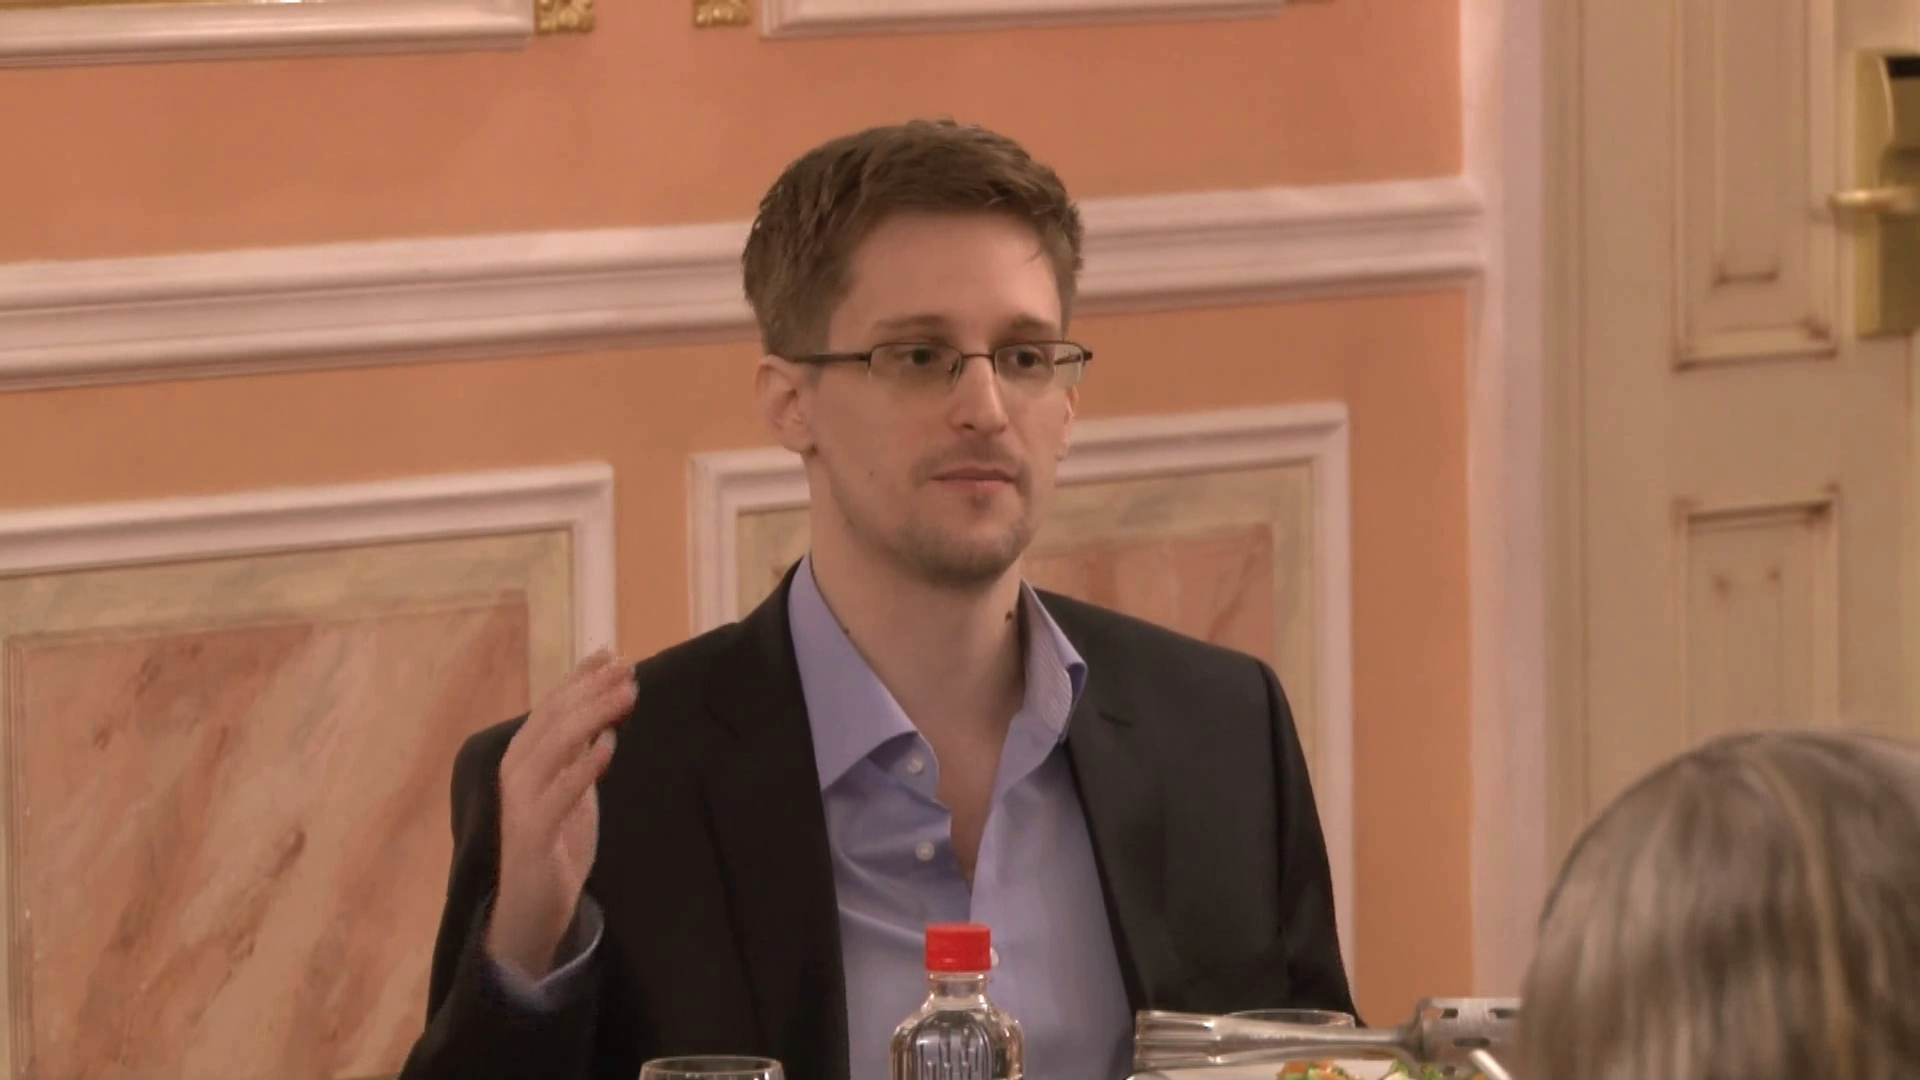 Edward Snowden Wallpapers